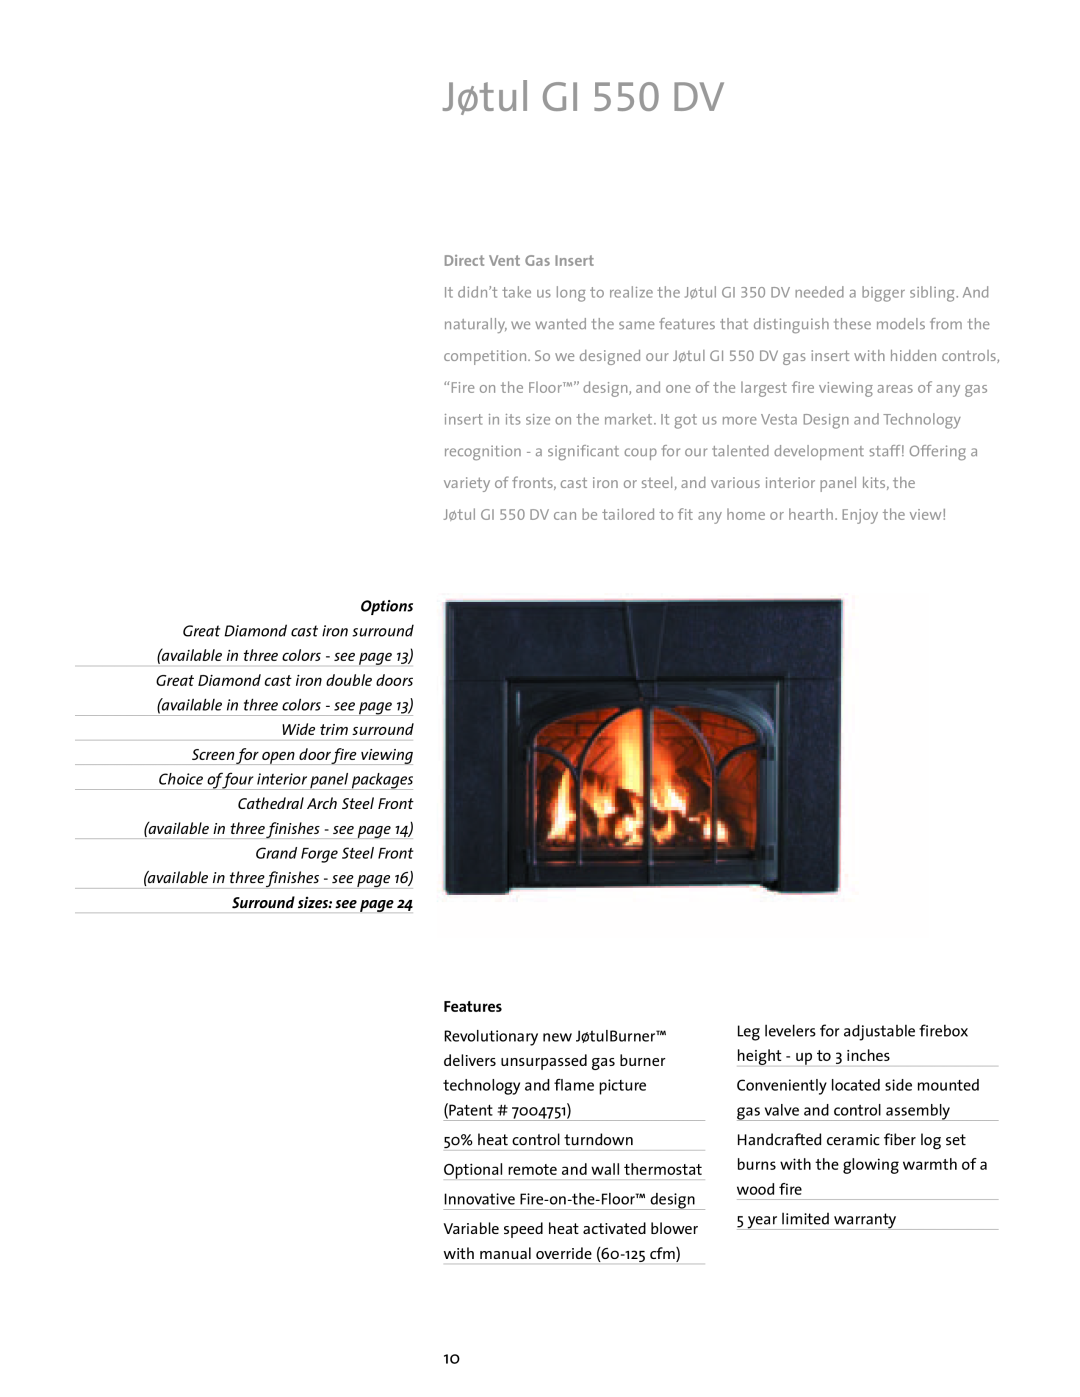 Jotul Gas Inserts and Fireplaces brochure Jøtul GI 550 DV, Product name, Direct Vent Gas Insert 